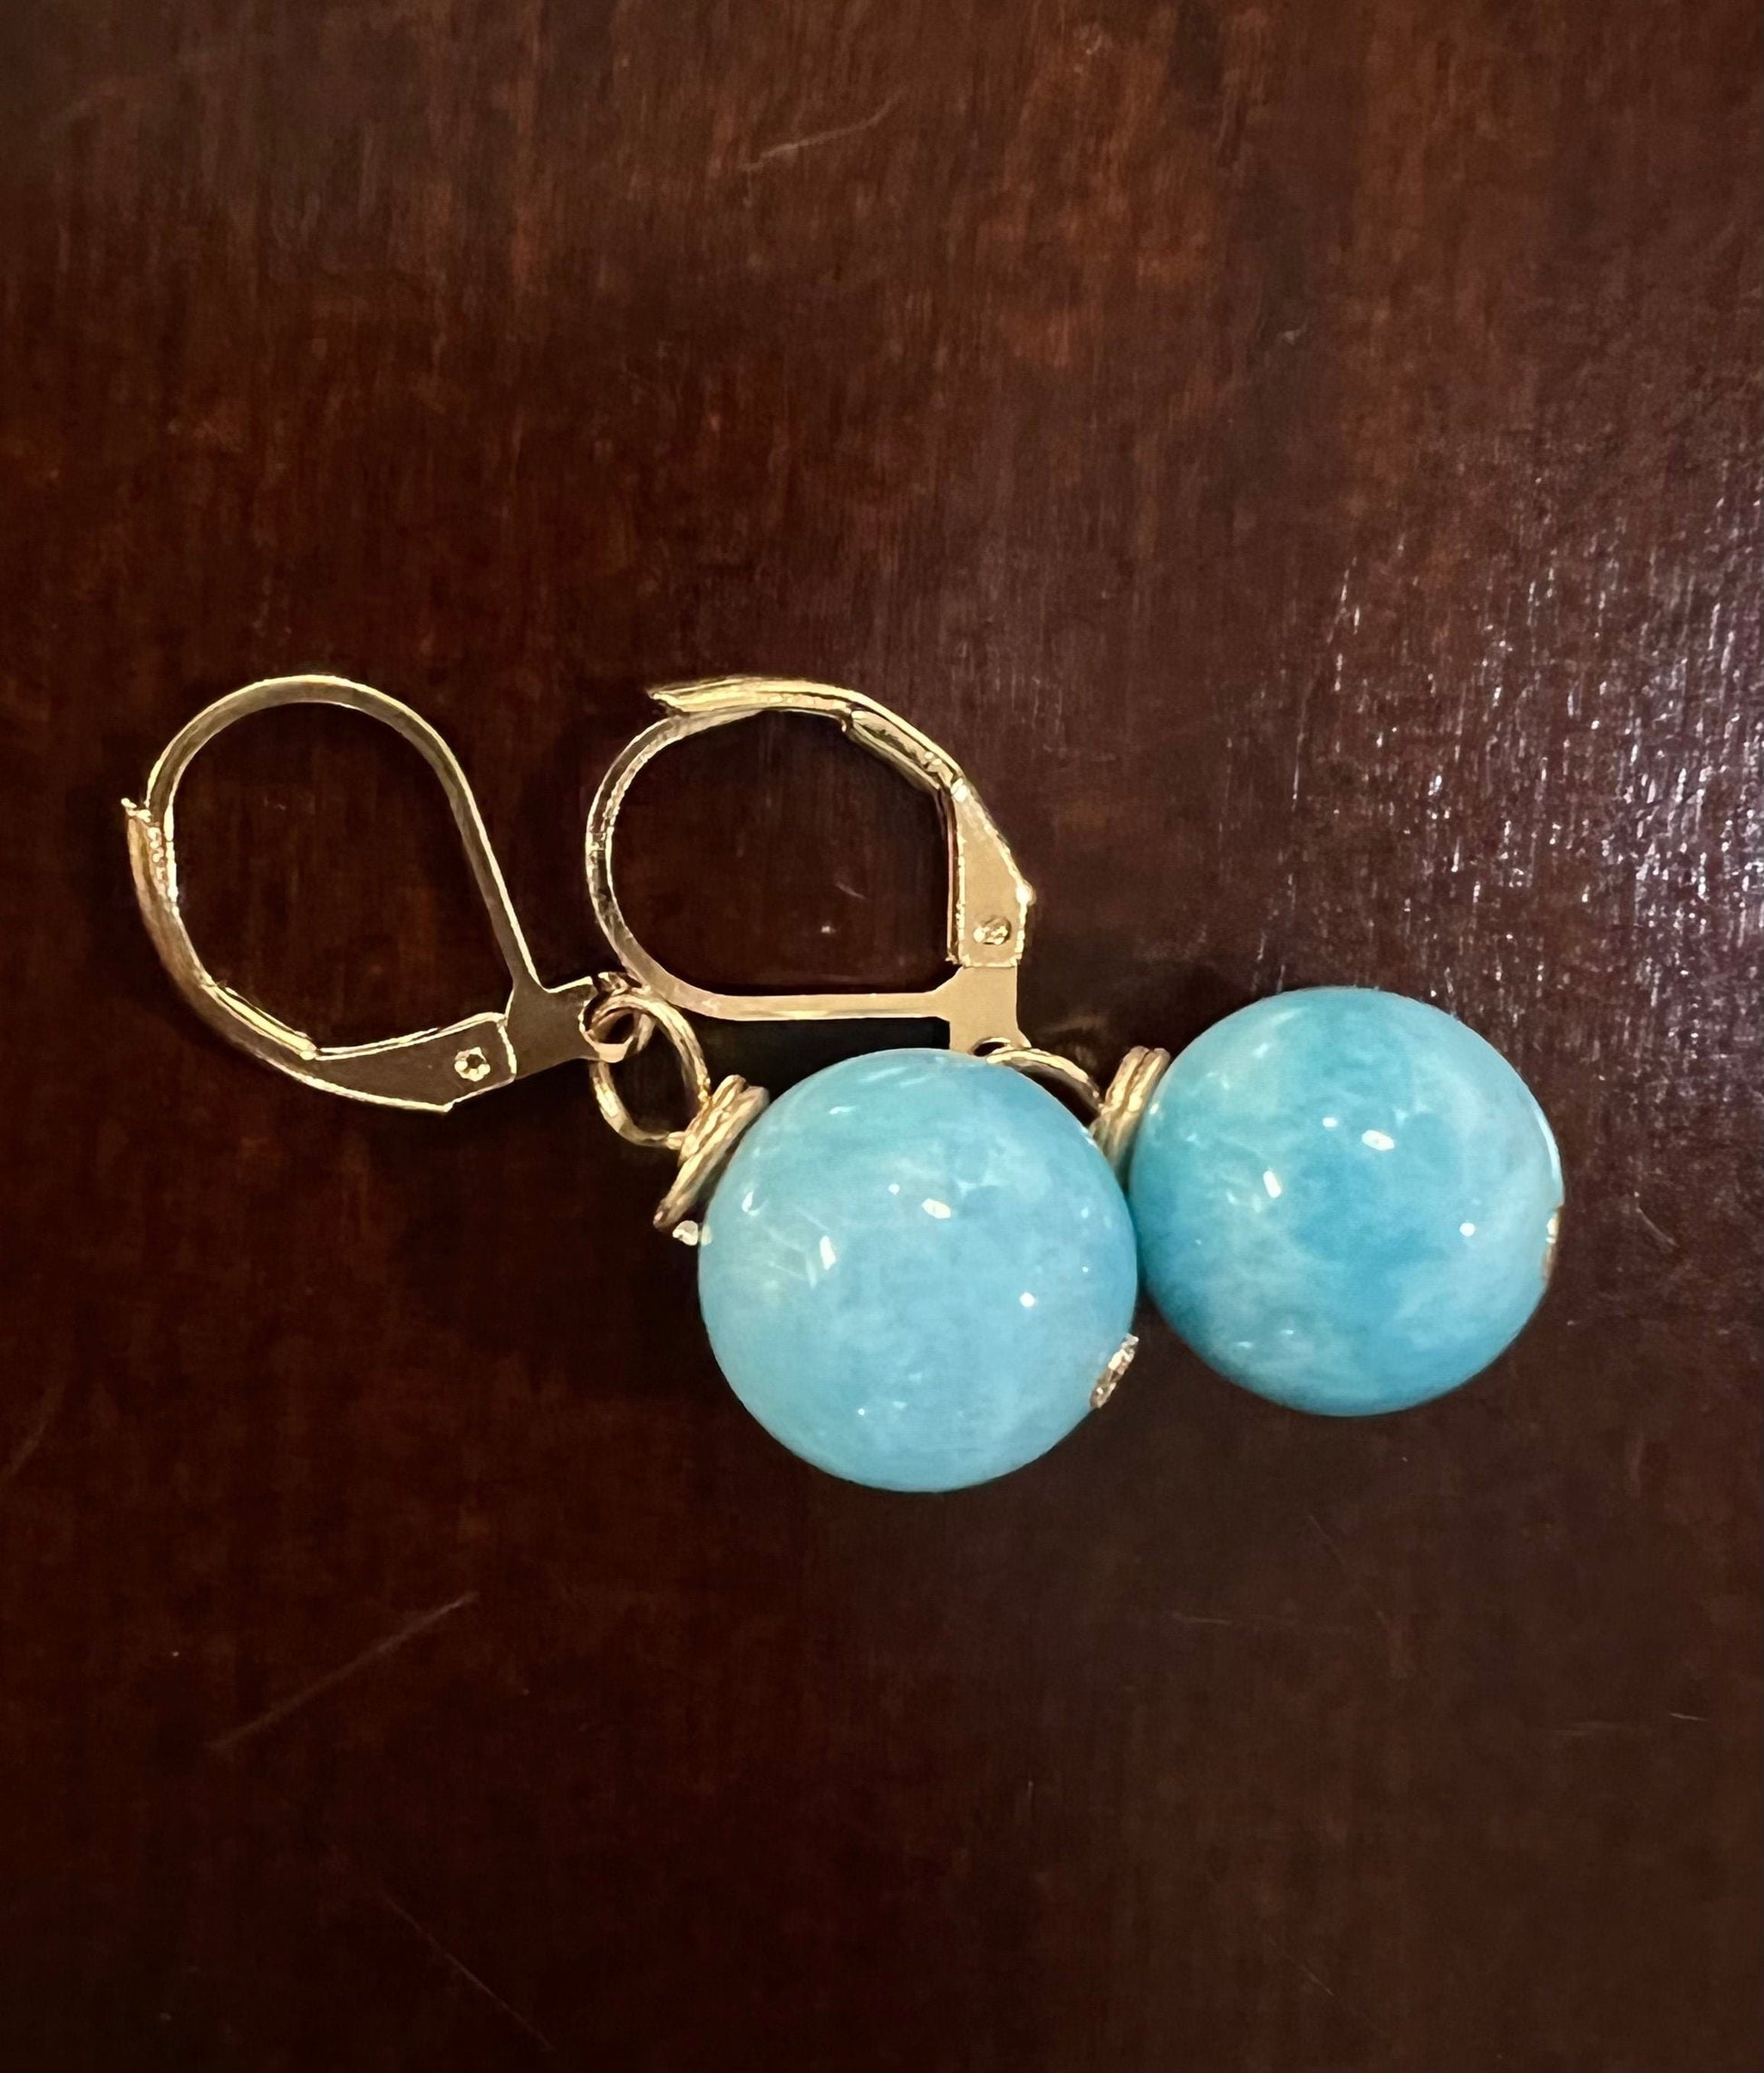 Aquamarine Milky 12mm round handmade Leverback earrings in silver, gold Victorian style elegant minimalist Earrings gift December Birthstone